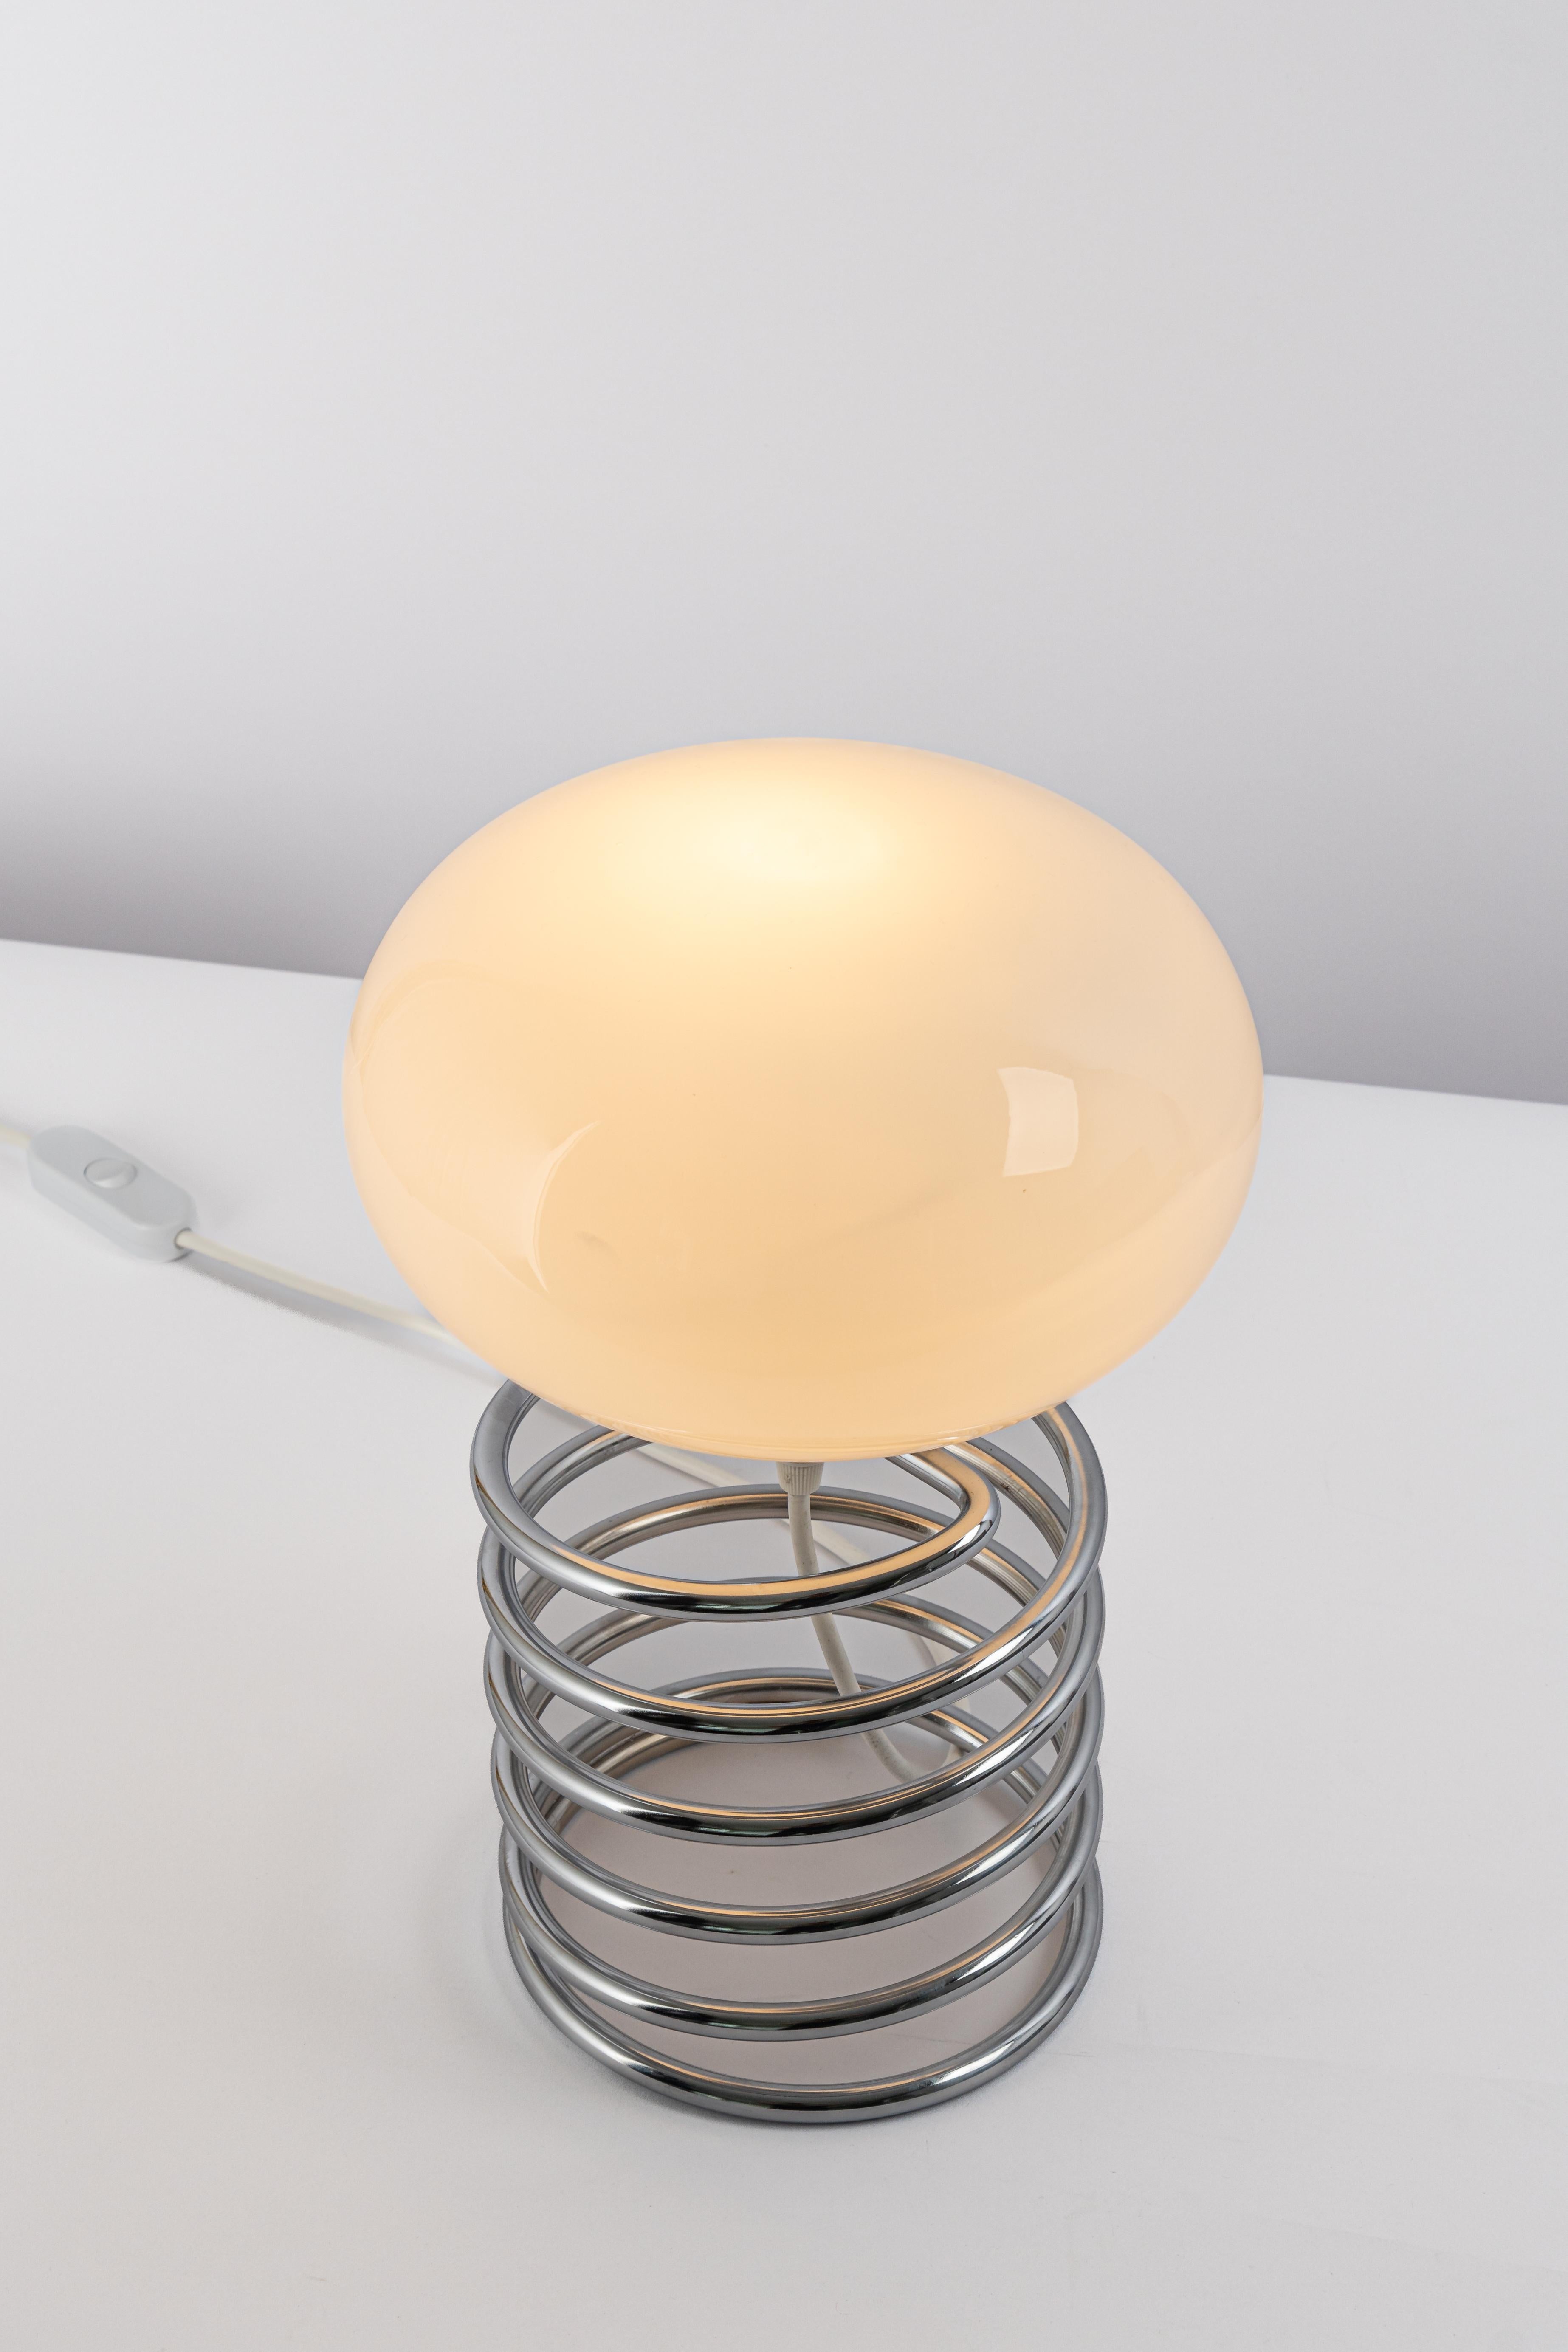 Fin du 20e siècle Superbe lampe de bureau en forme de spirale, Ingo Maurer, 1970